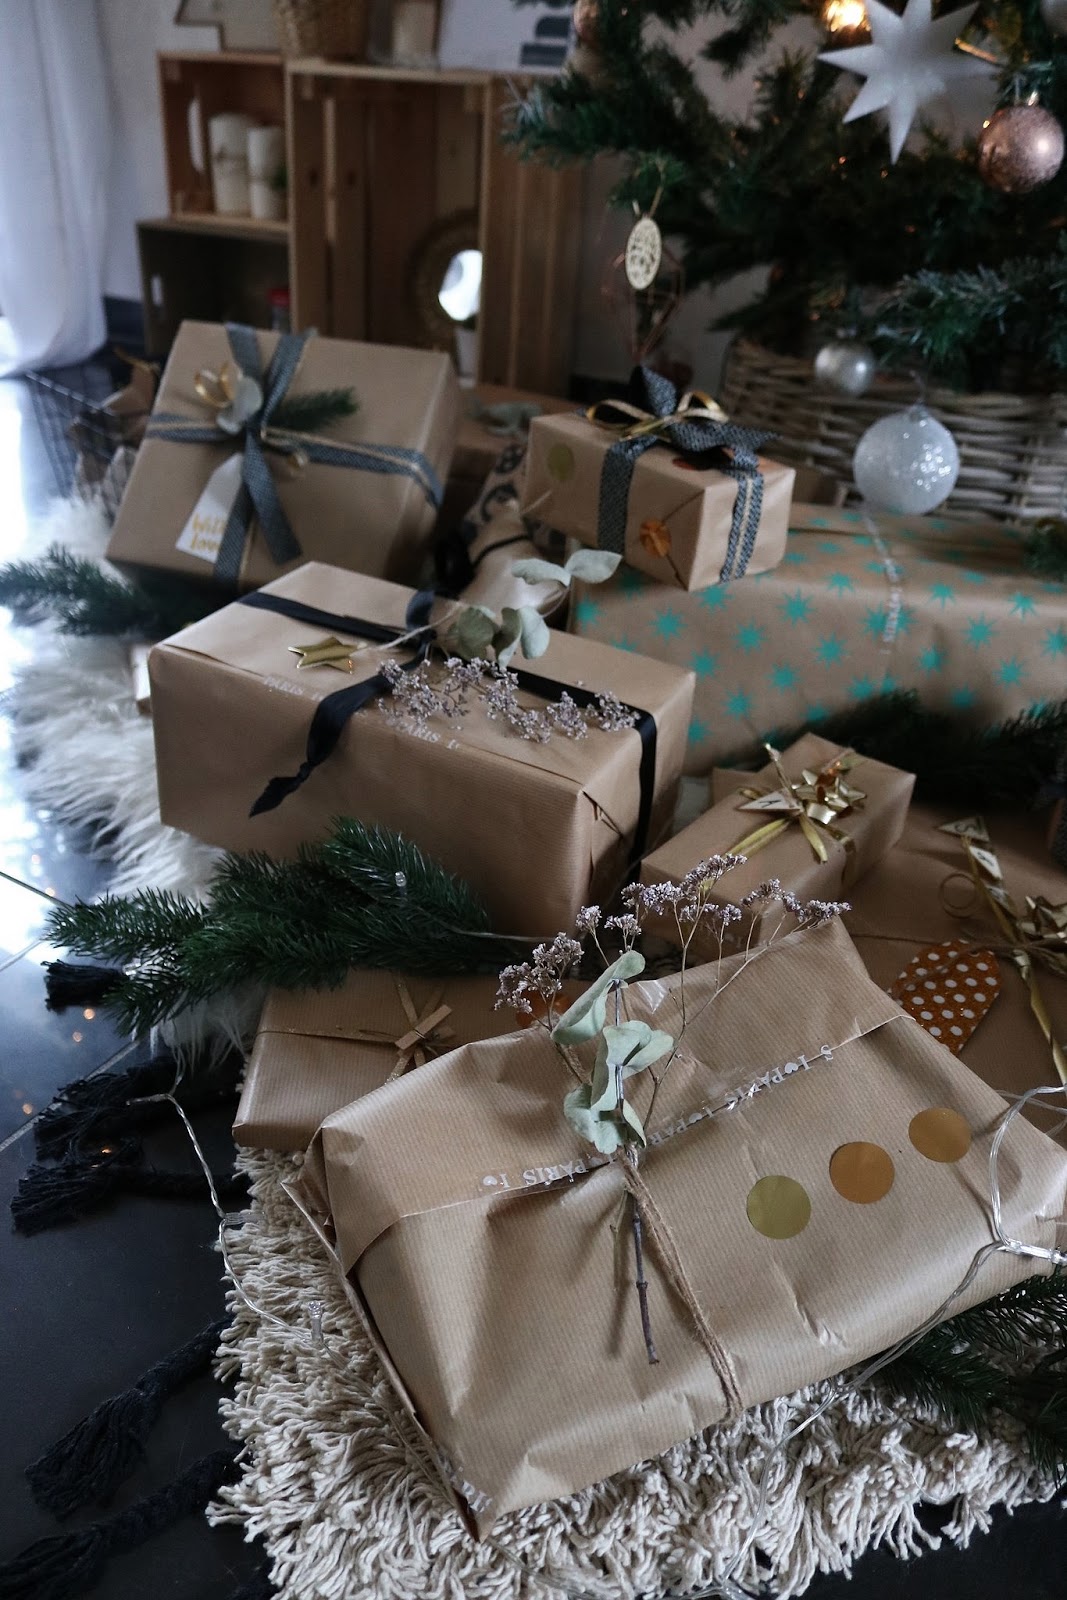 pauline-dress-besancon-noel-emballages-cadeaux-gift-christmas-2017-2018-kraft-nature-sapin-panier-garni-ruban-decore-etoile-dore-or-action-hema